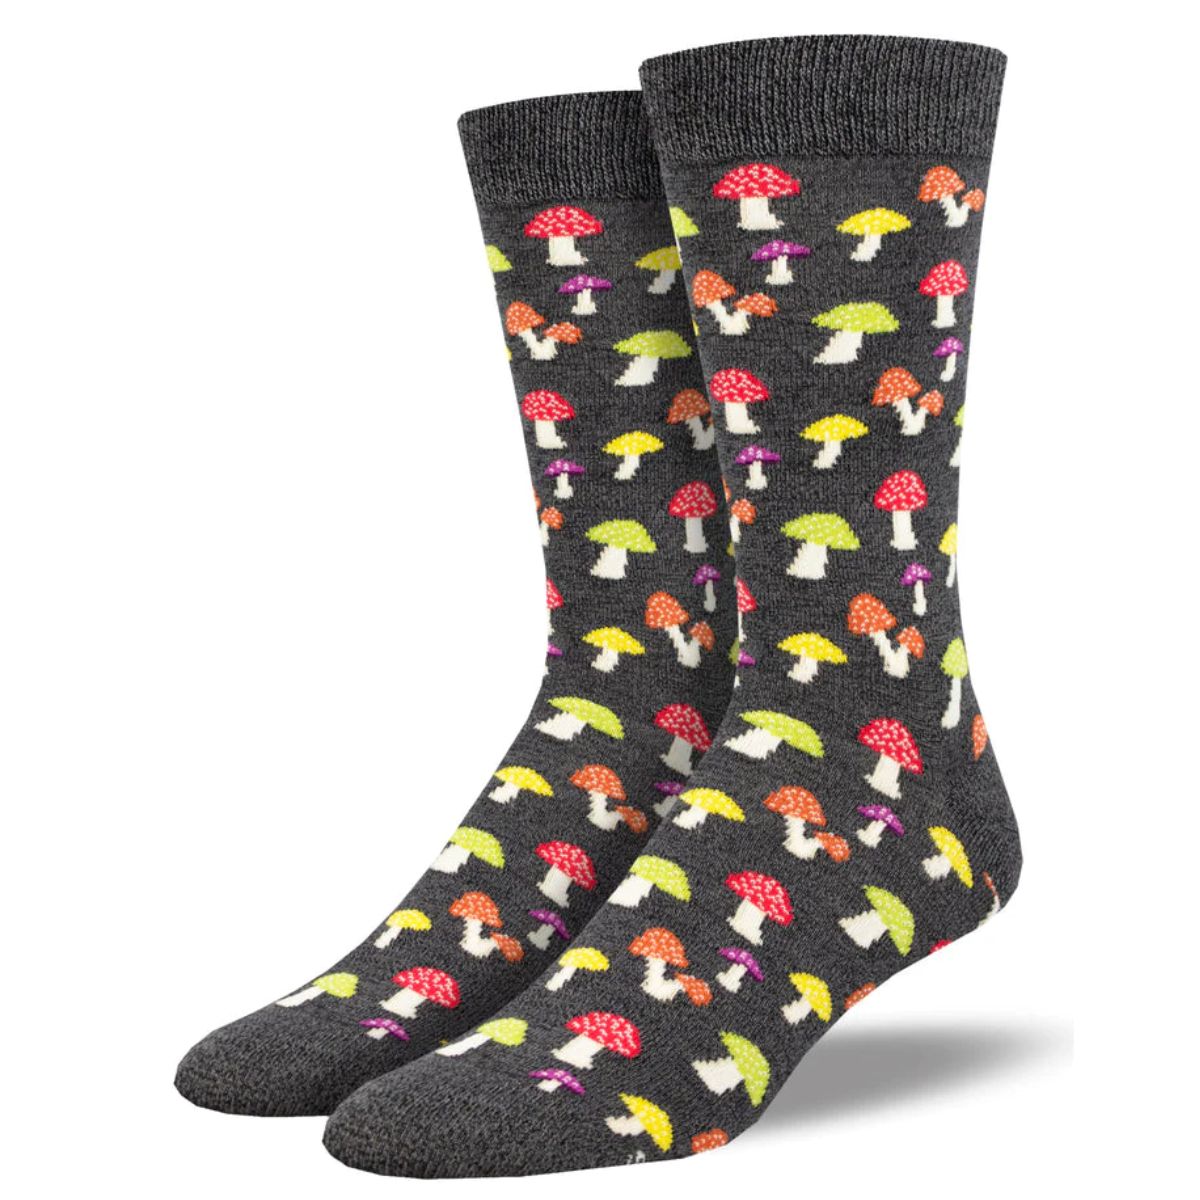 Colorful caps socks a pair of charcoal heather grey socks with  mushroom print. 